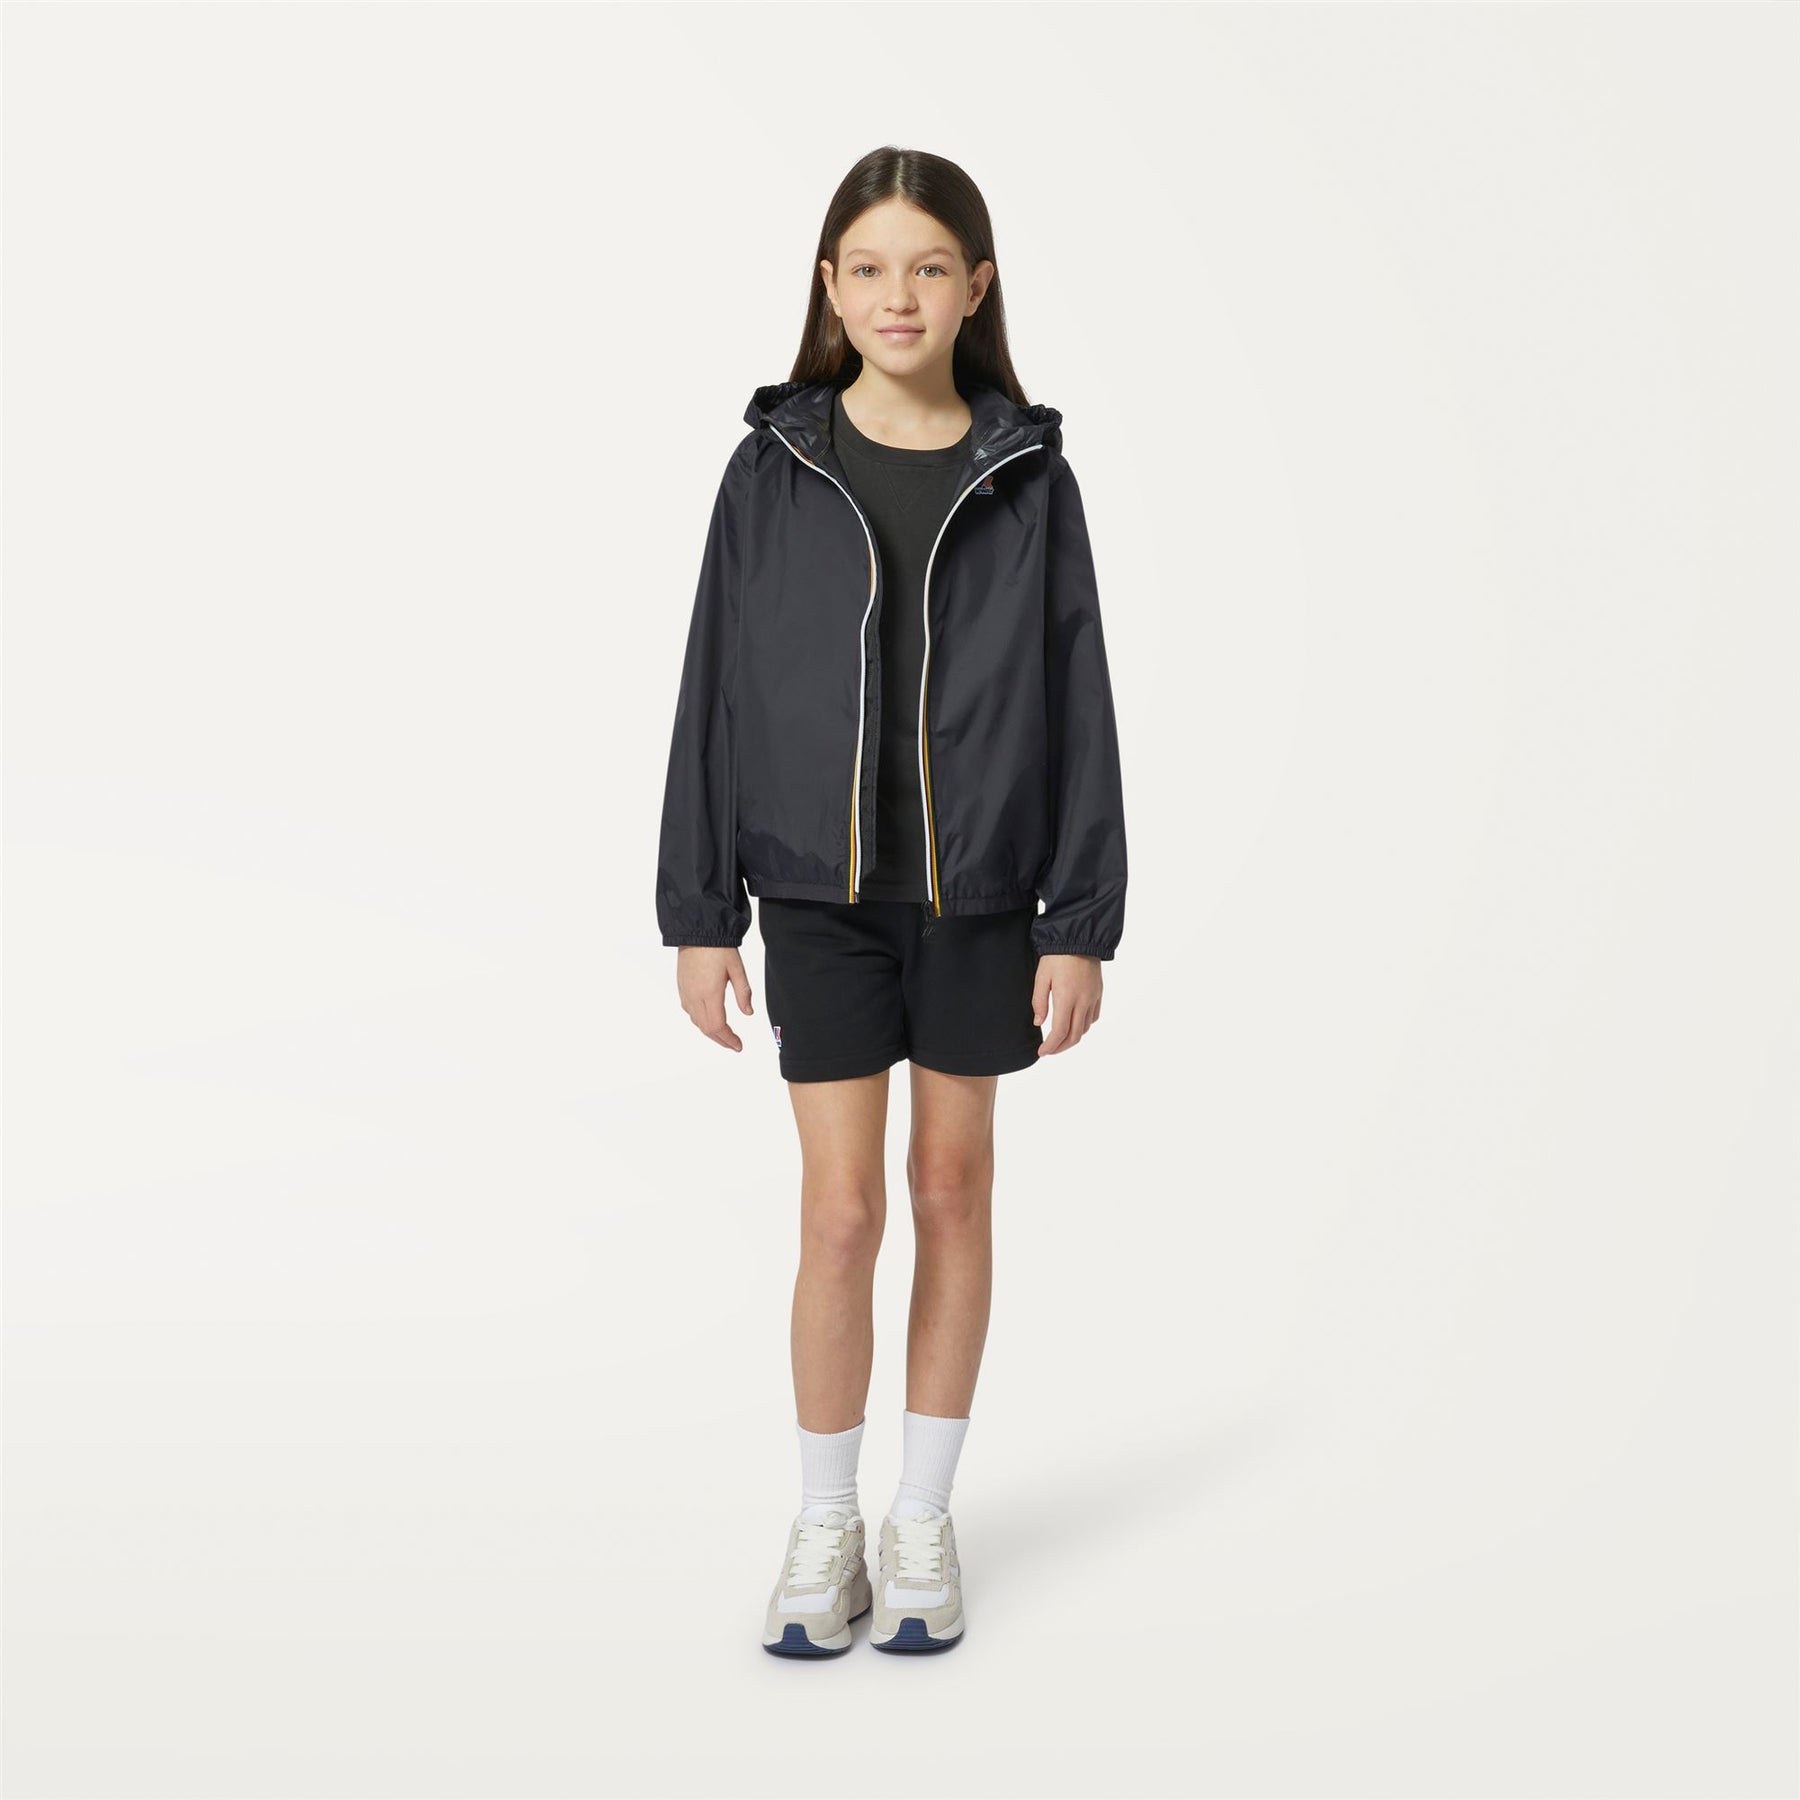 Claude - Kids Packable Full Zip Rain Jacket in Black Pure